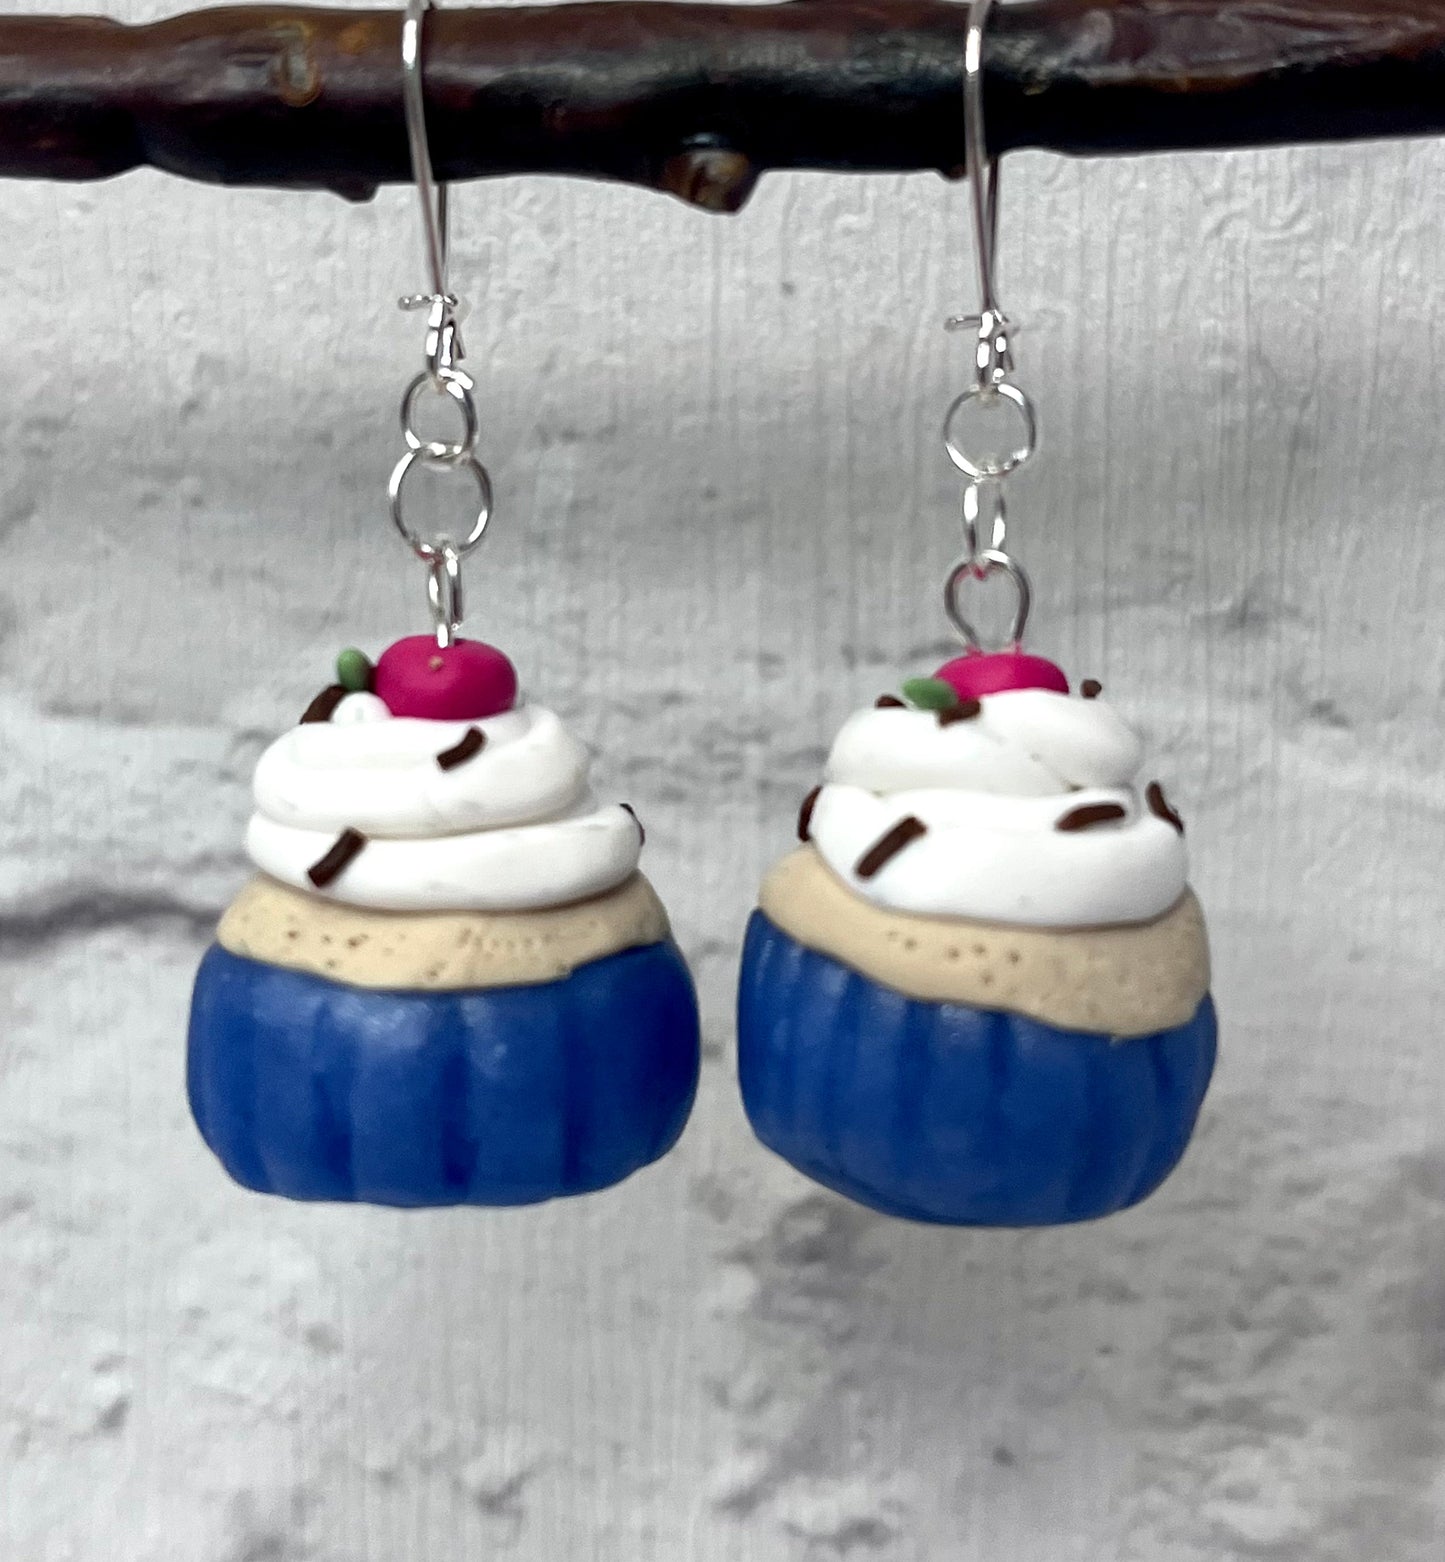 Handmade Cupcake Earrings